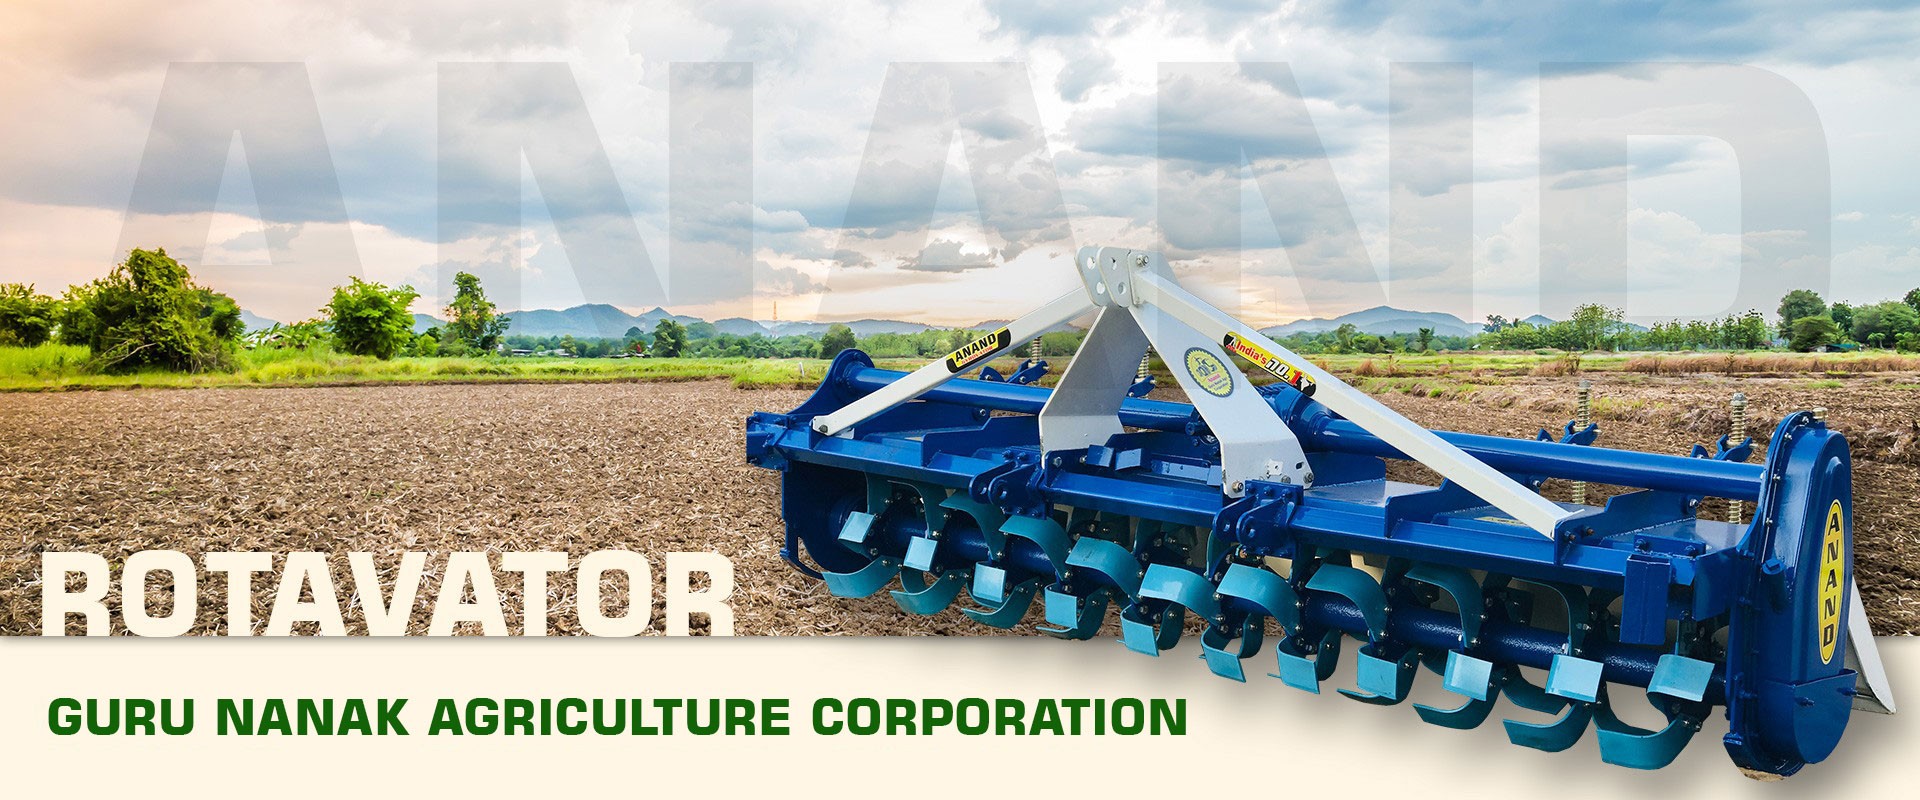 Rotavator Manufacturer and Supplier in Punjab India - Guru Nanak Agriculture Corporation